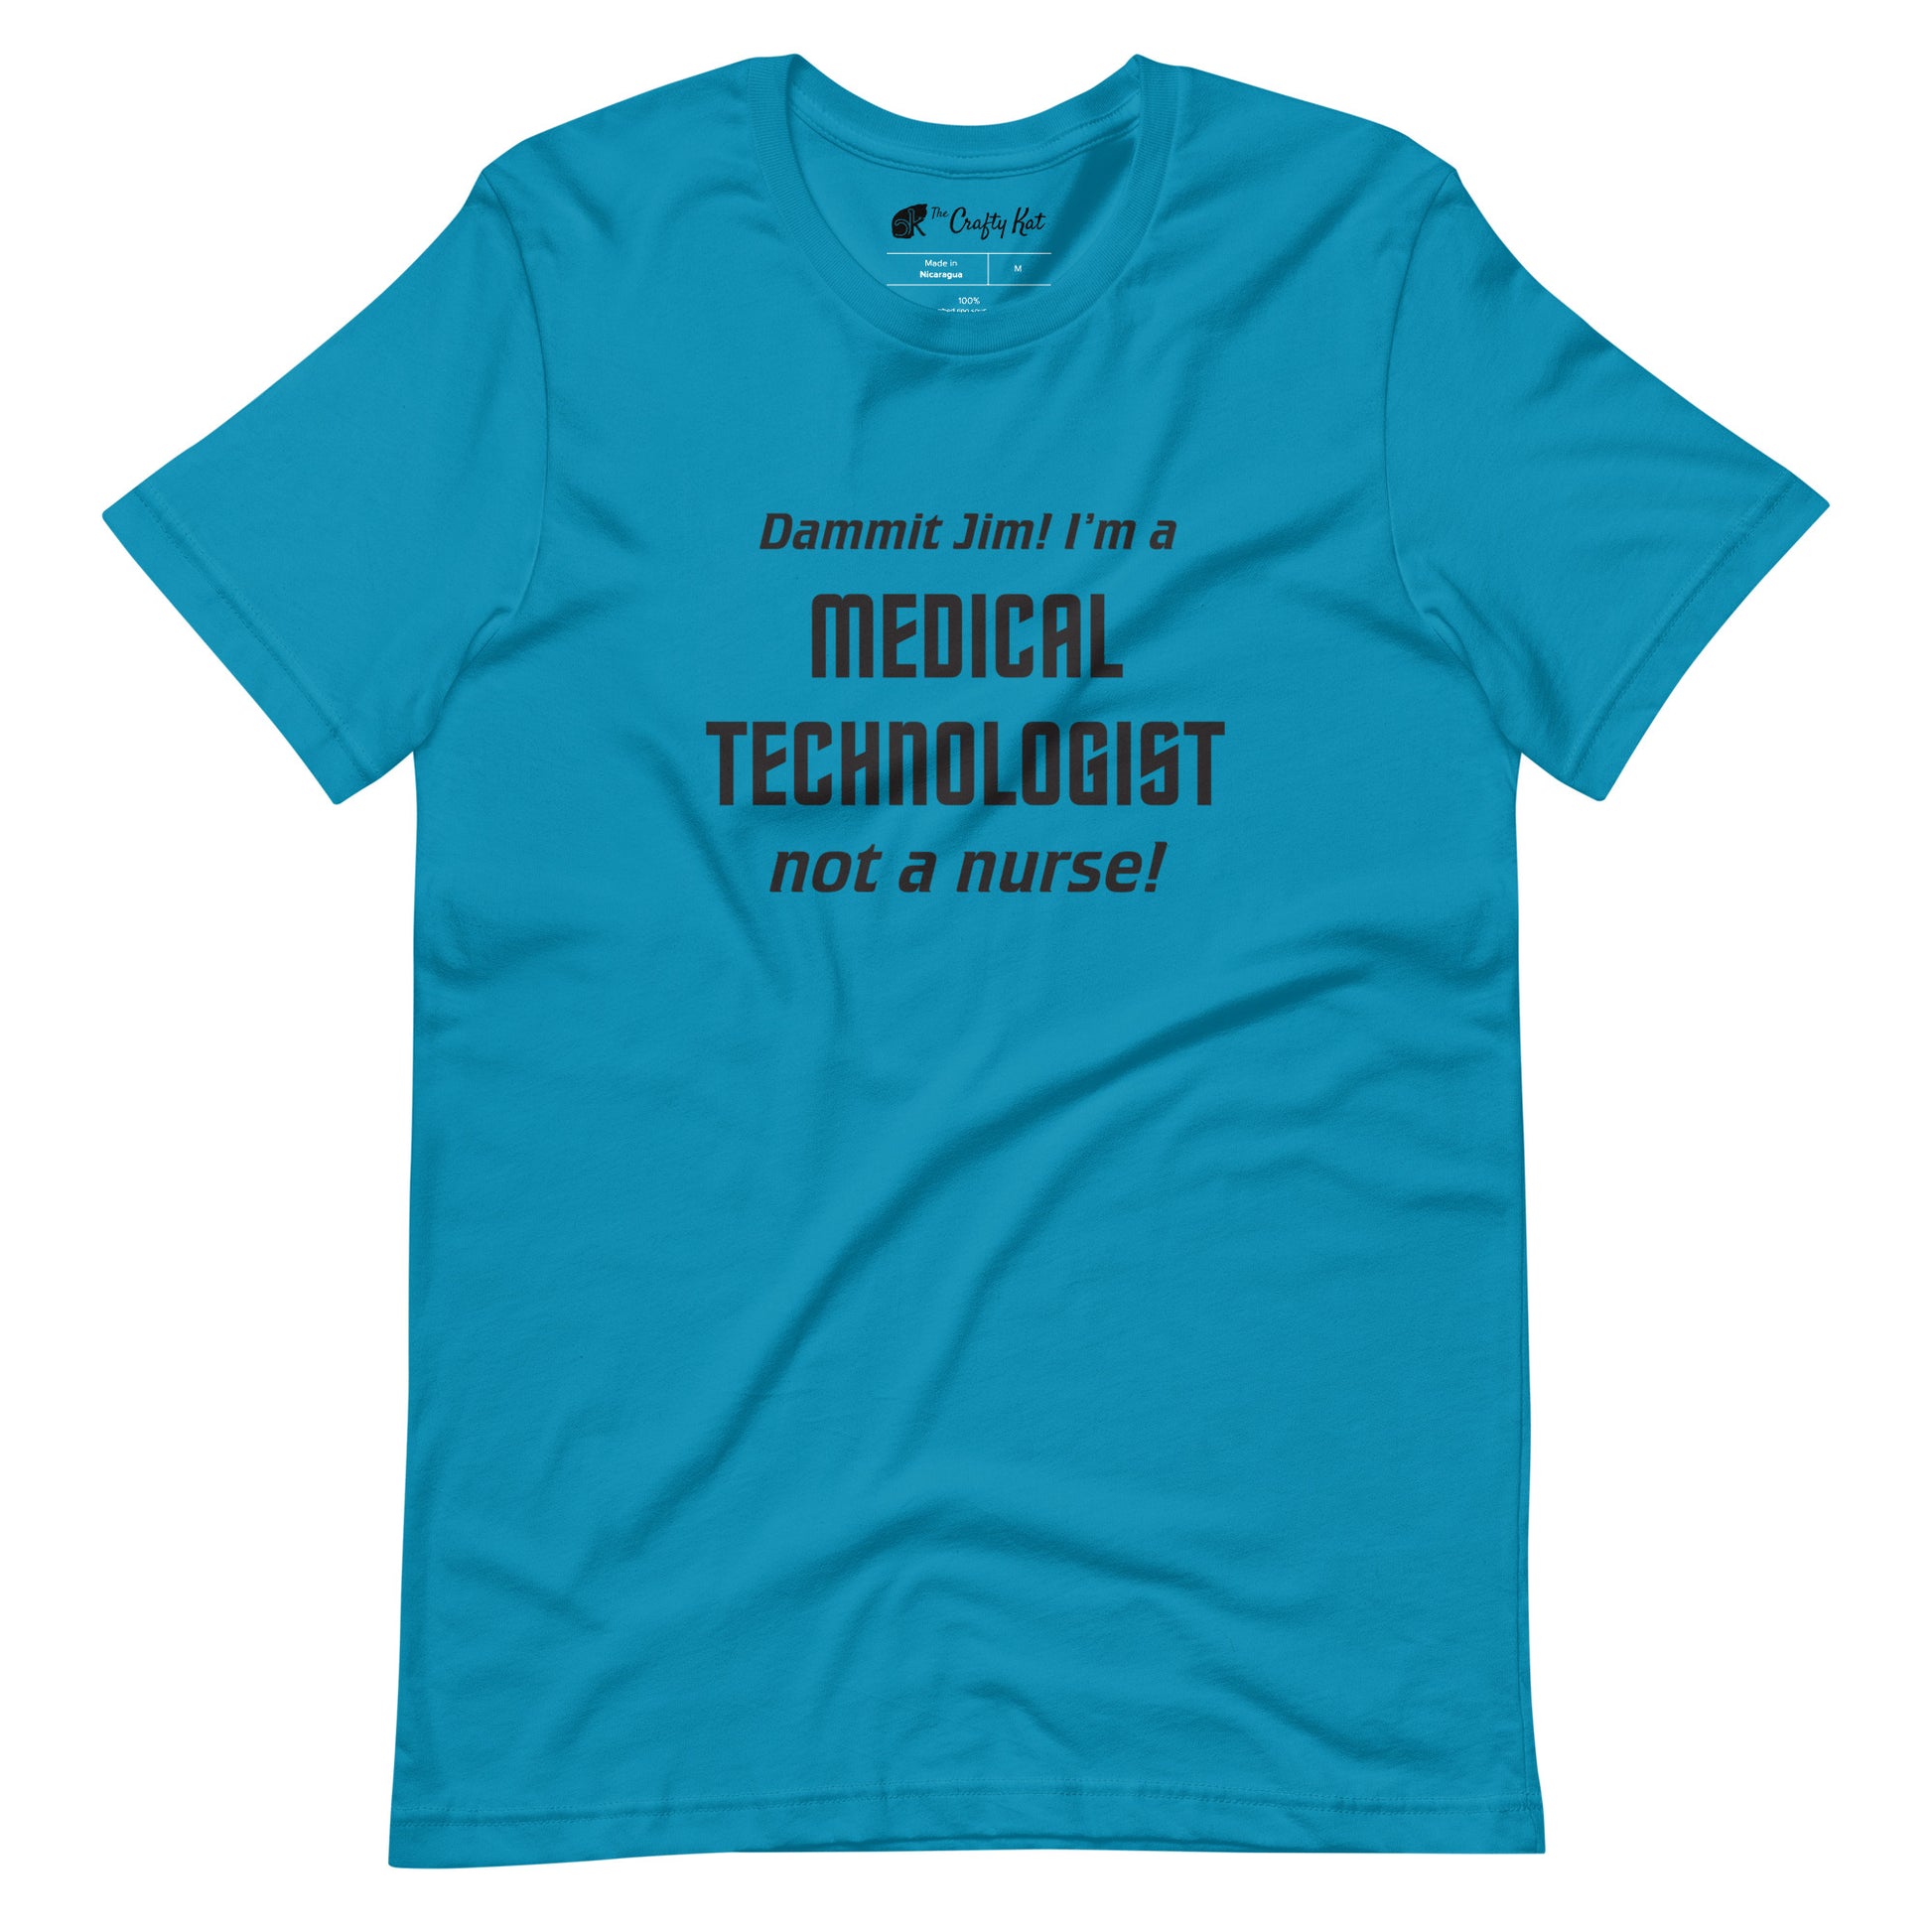 Aqua (cyan) t-shirt with text graphic in Star Trek font: "Dammit Jim! I'm a MEDICAL TECHNOLOGIST not a nurse!"